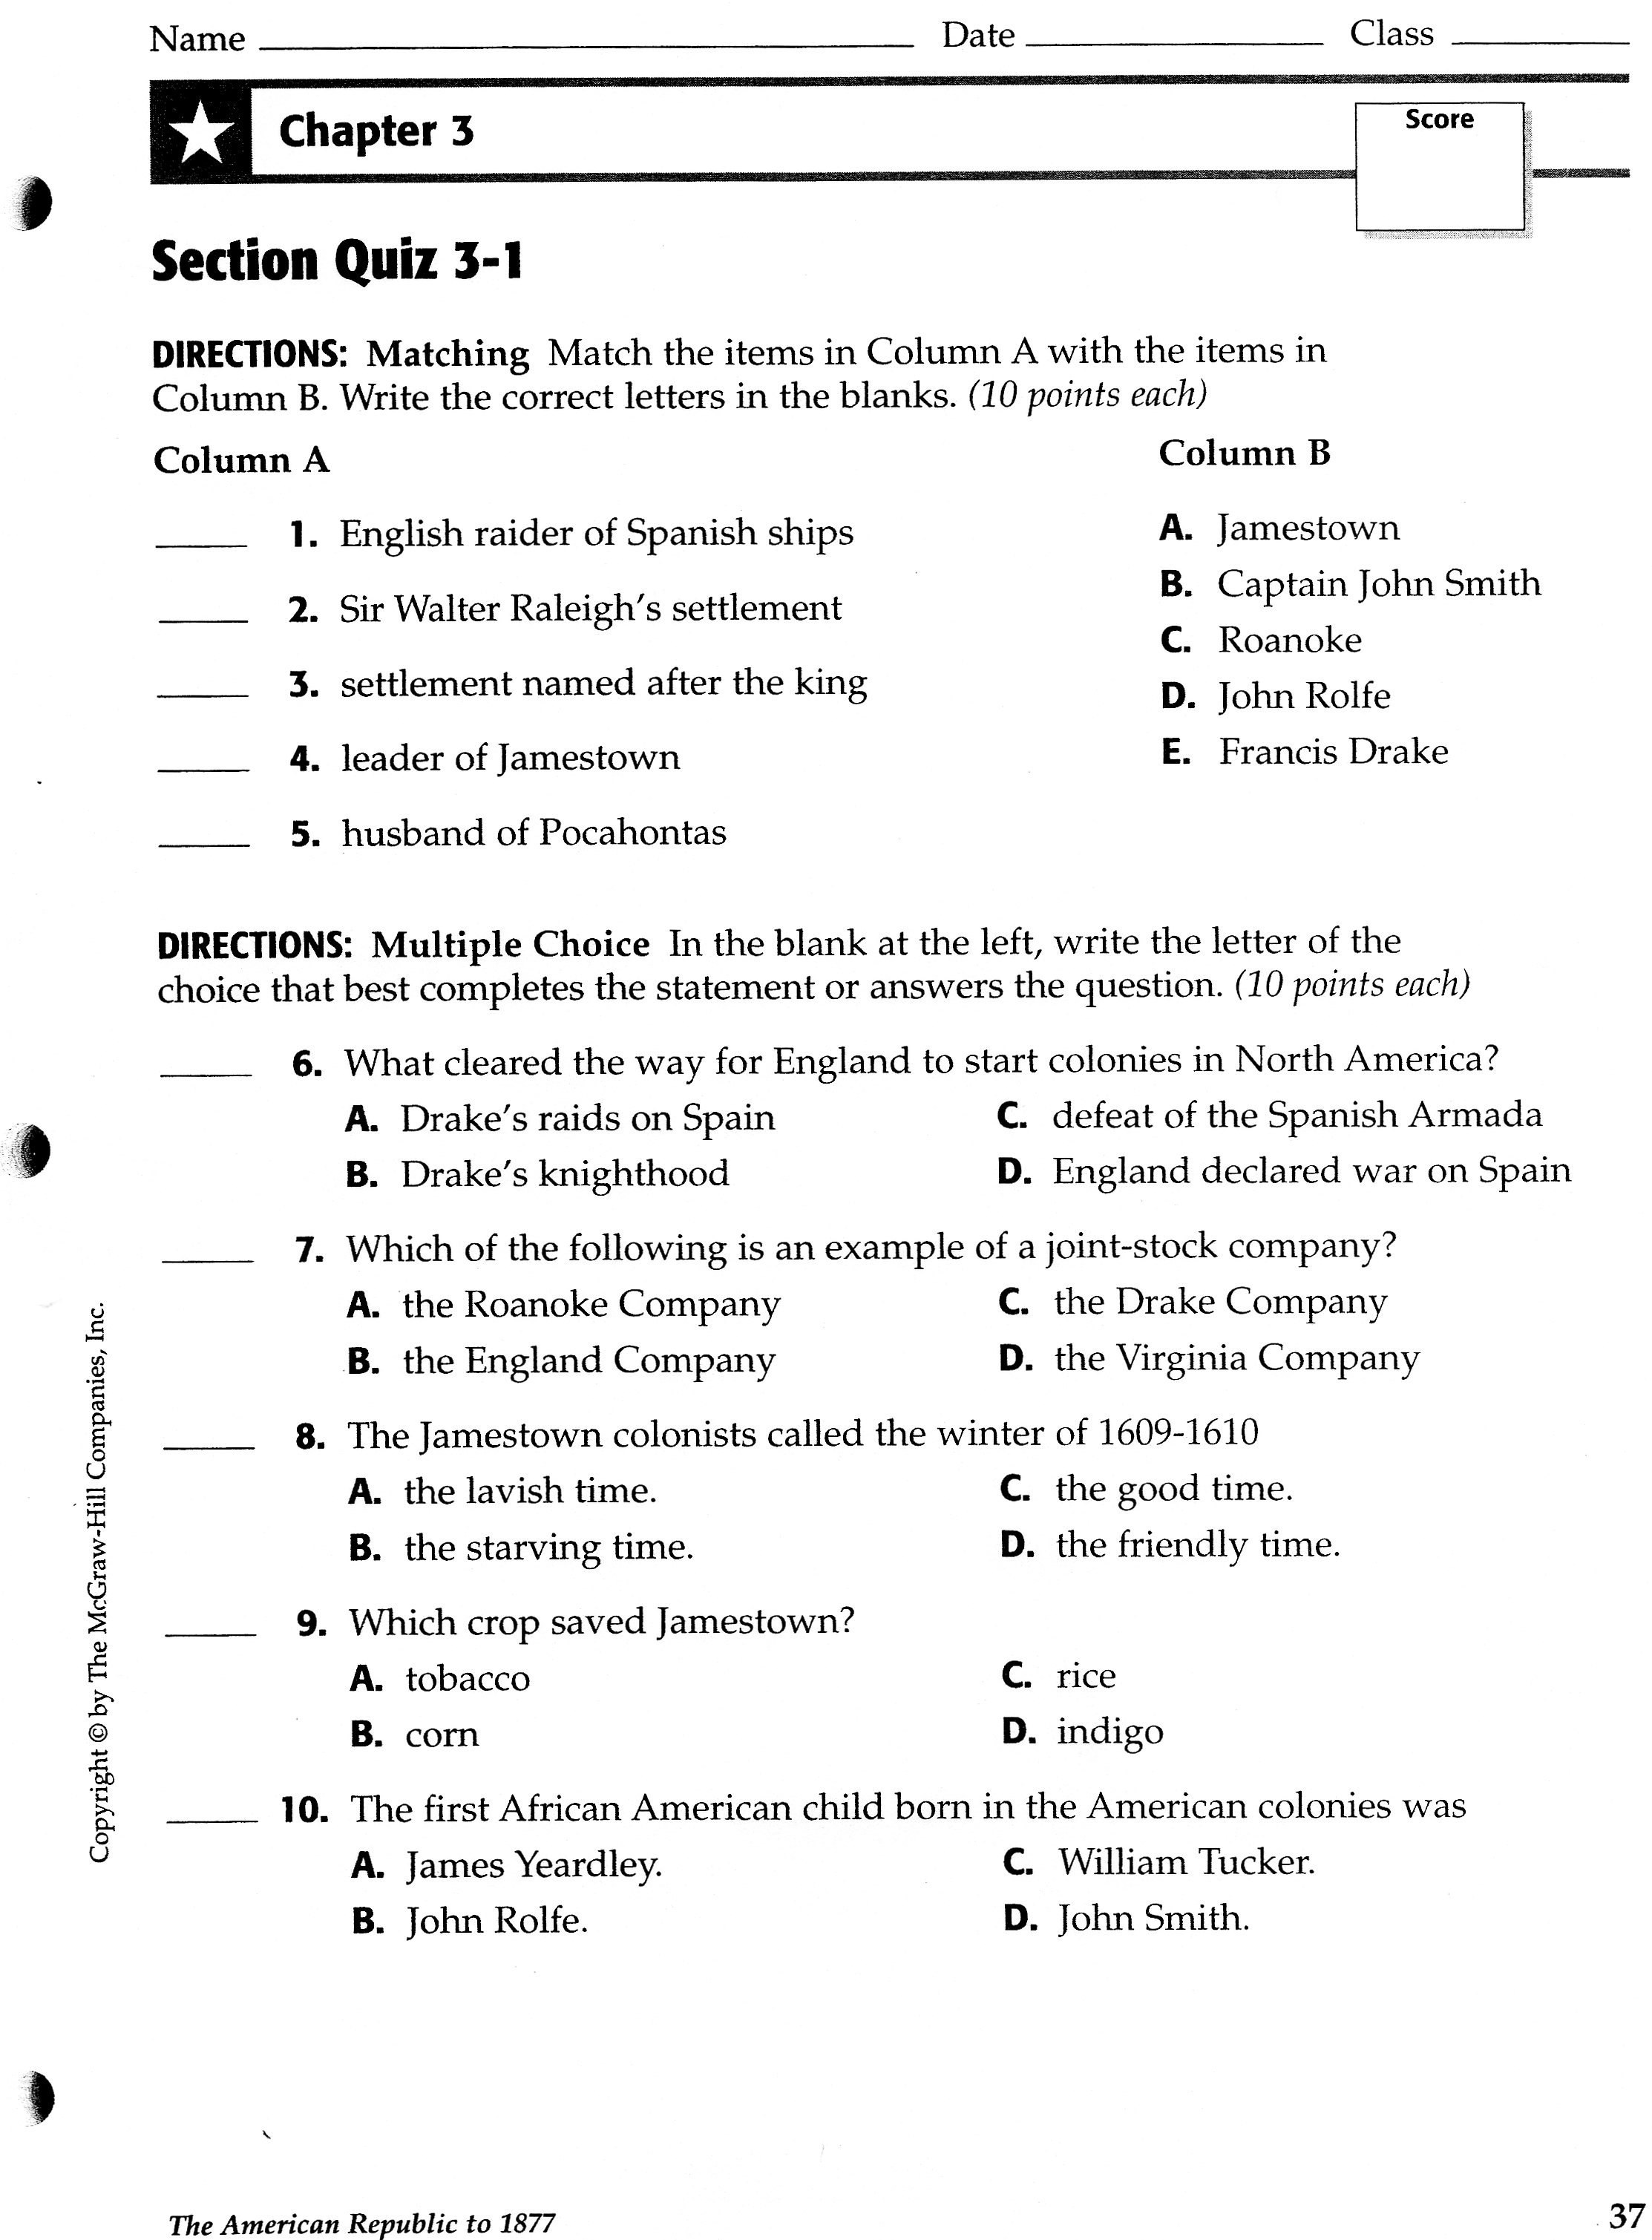 Free 7th Grade Social Studies Worksheets Image